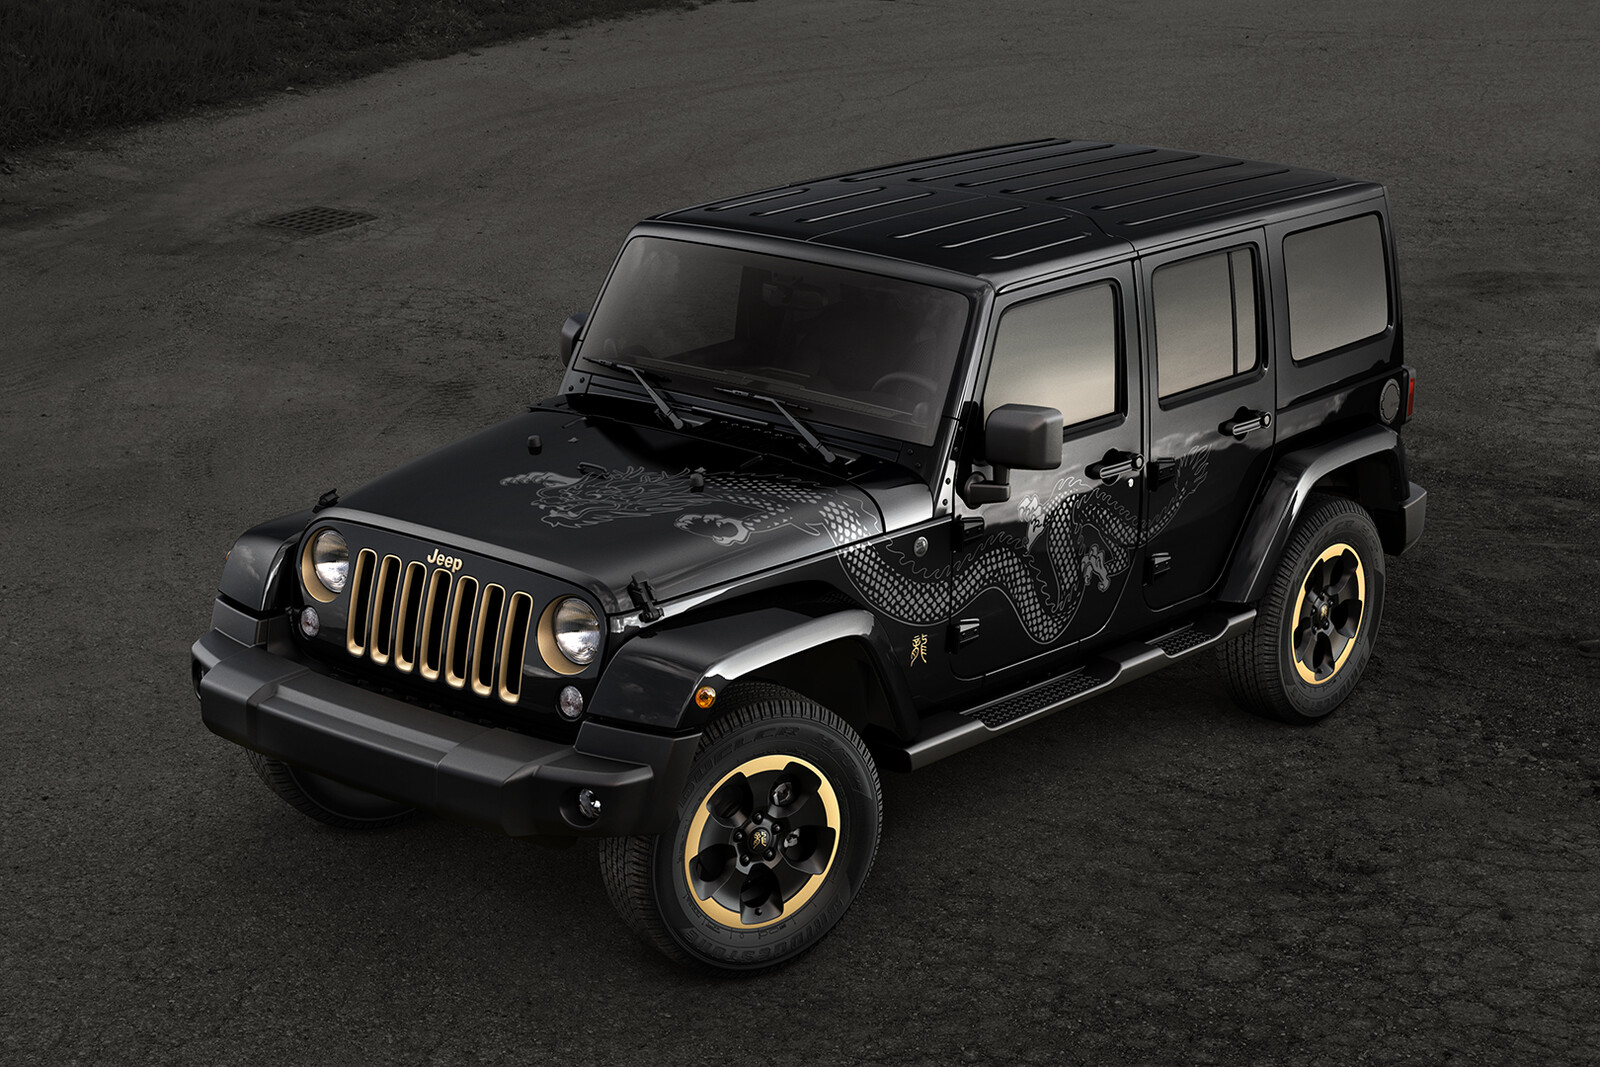 Jeep Wrangler: Fully CG Vehicle
Tasks: Materials &amp; Lighting